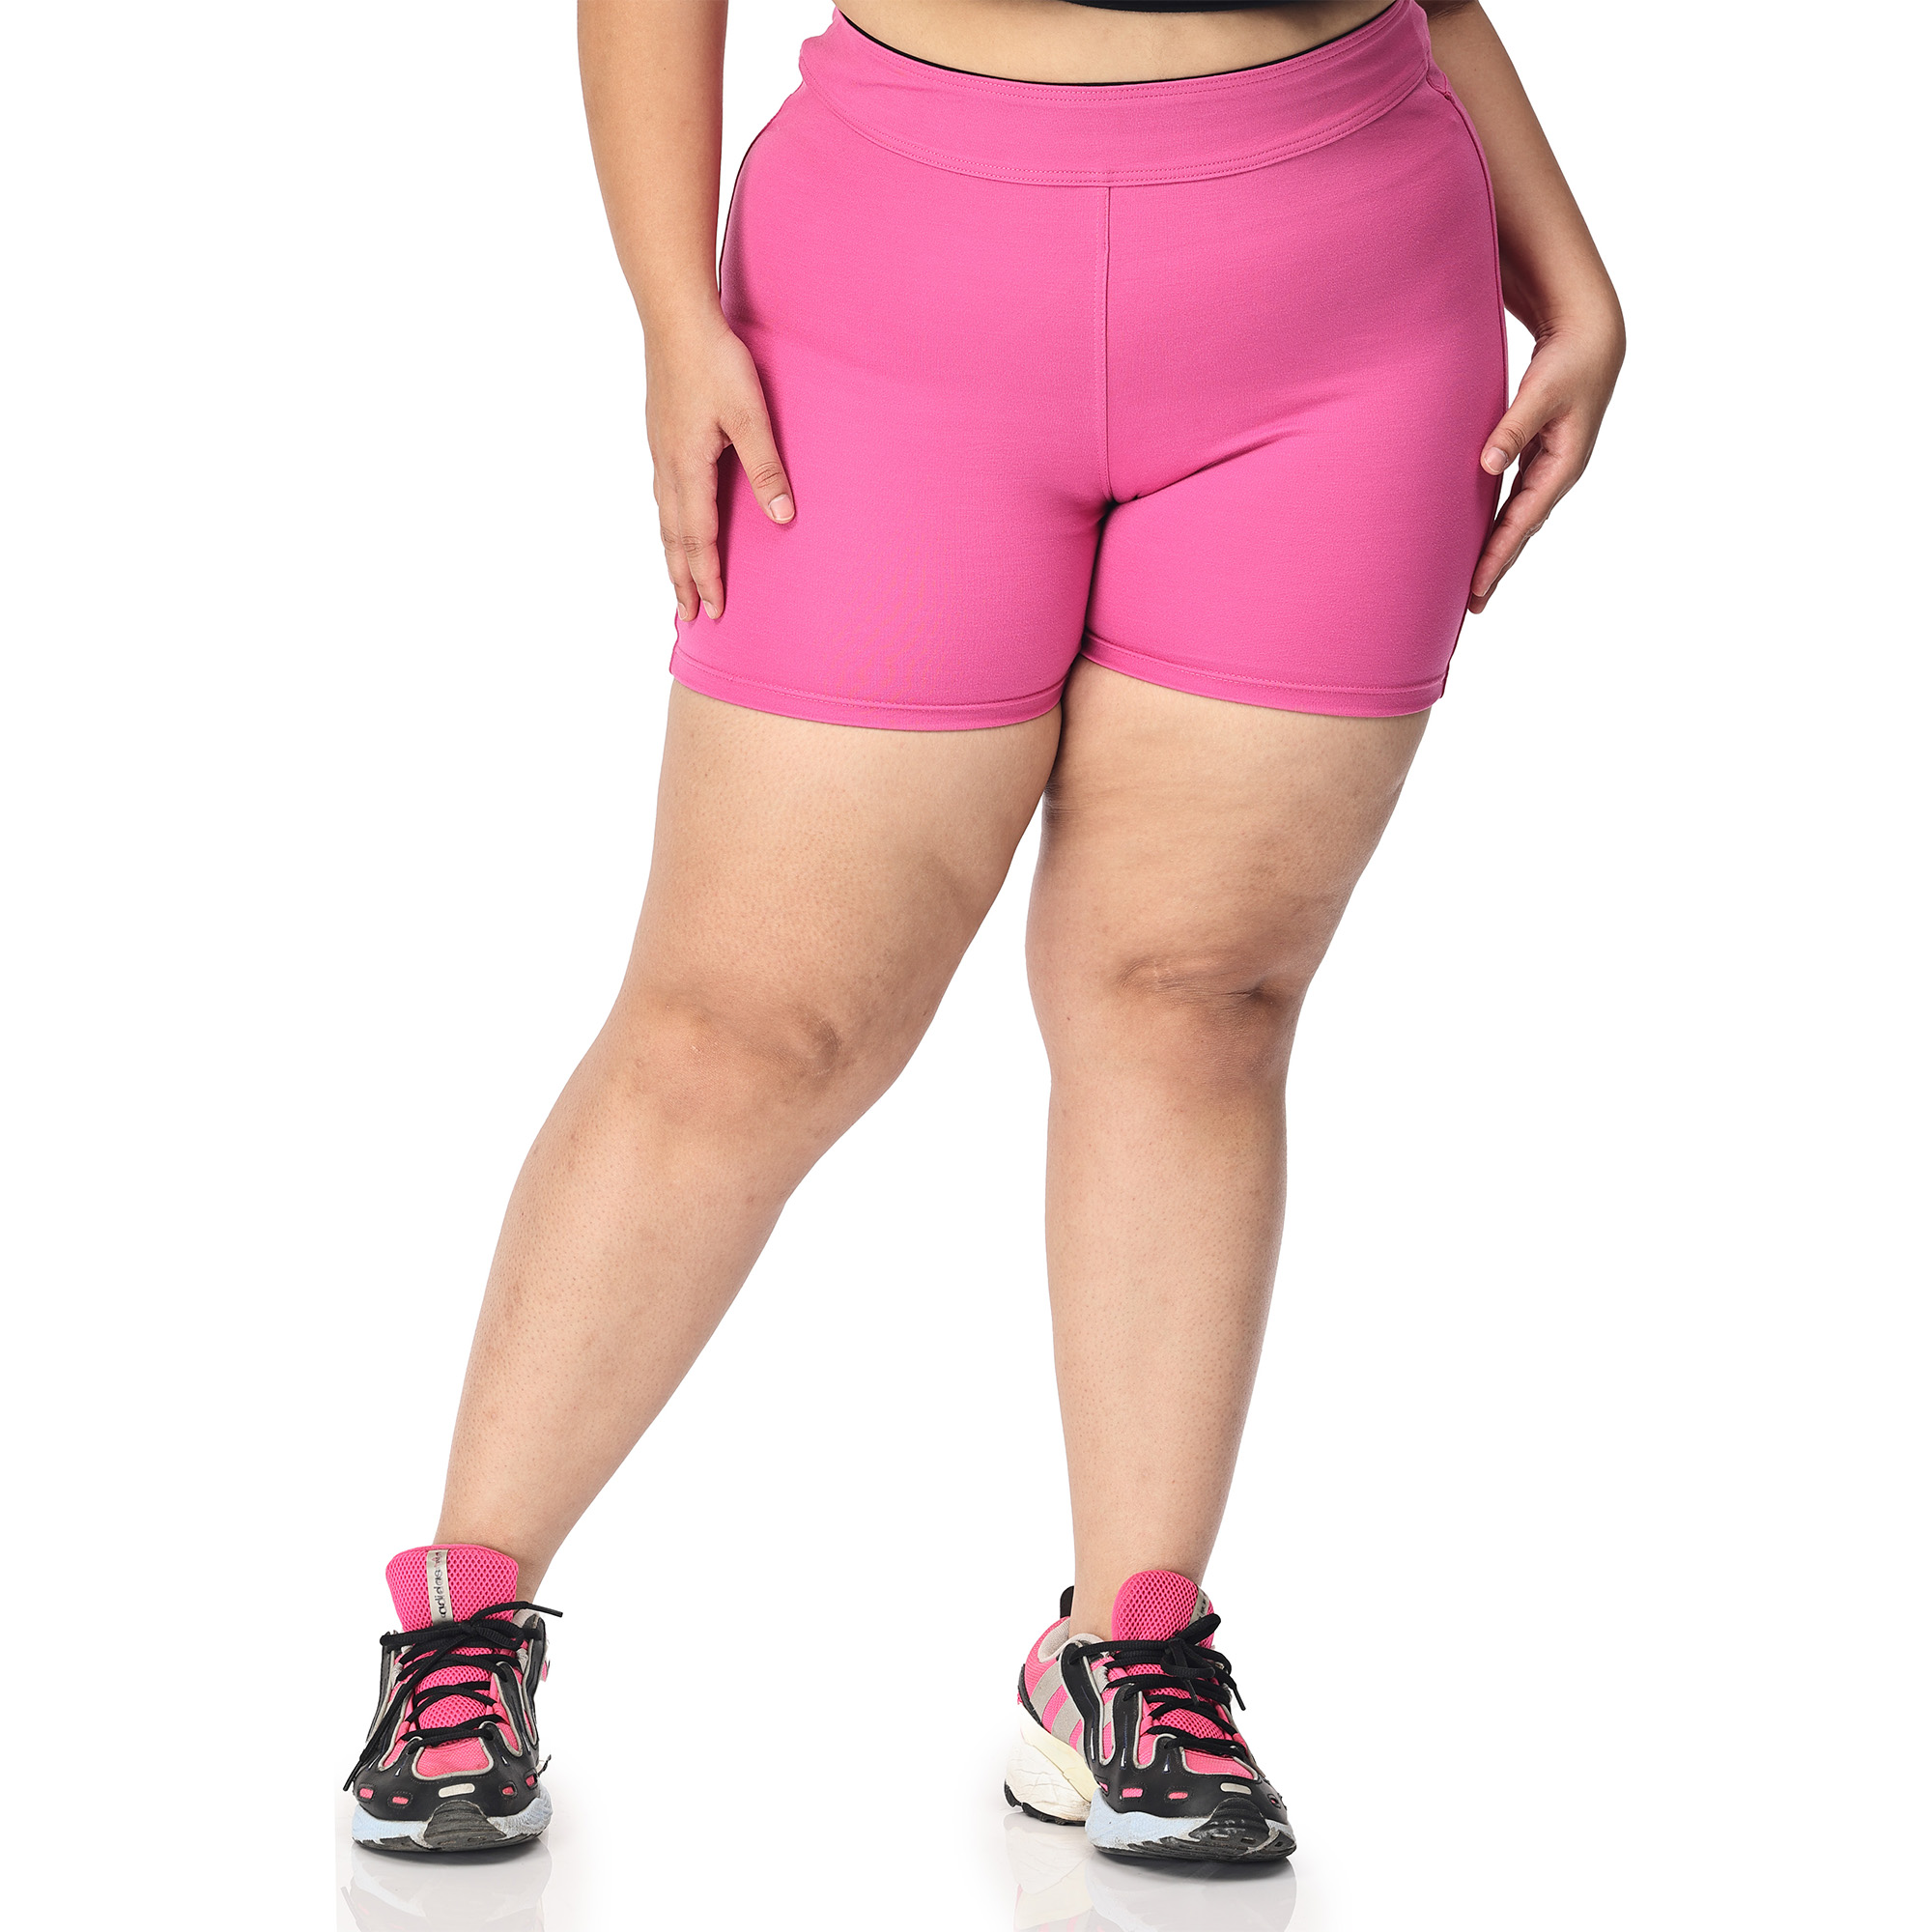 Pink shorts women - Plus size active shape wear - 2 back pockets